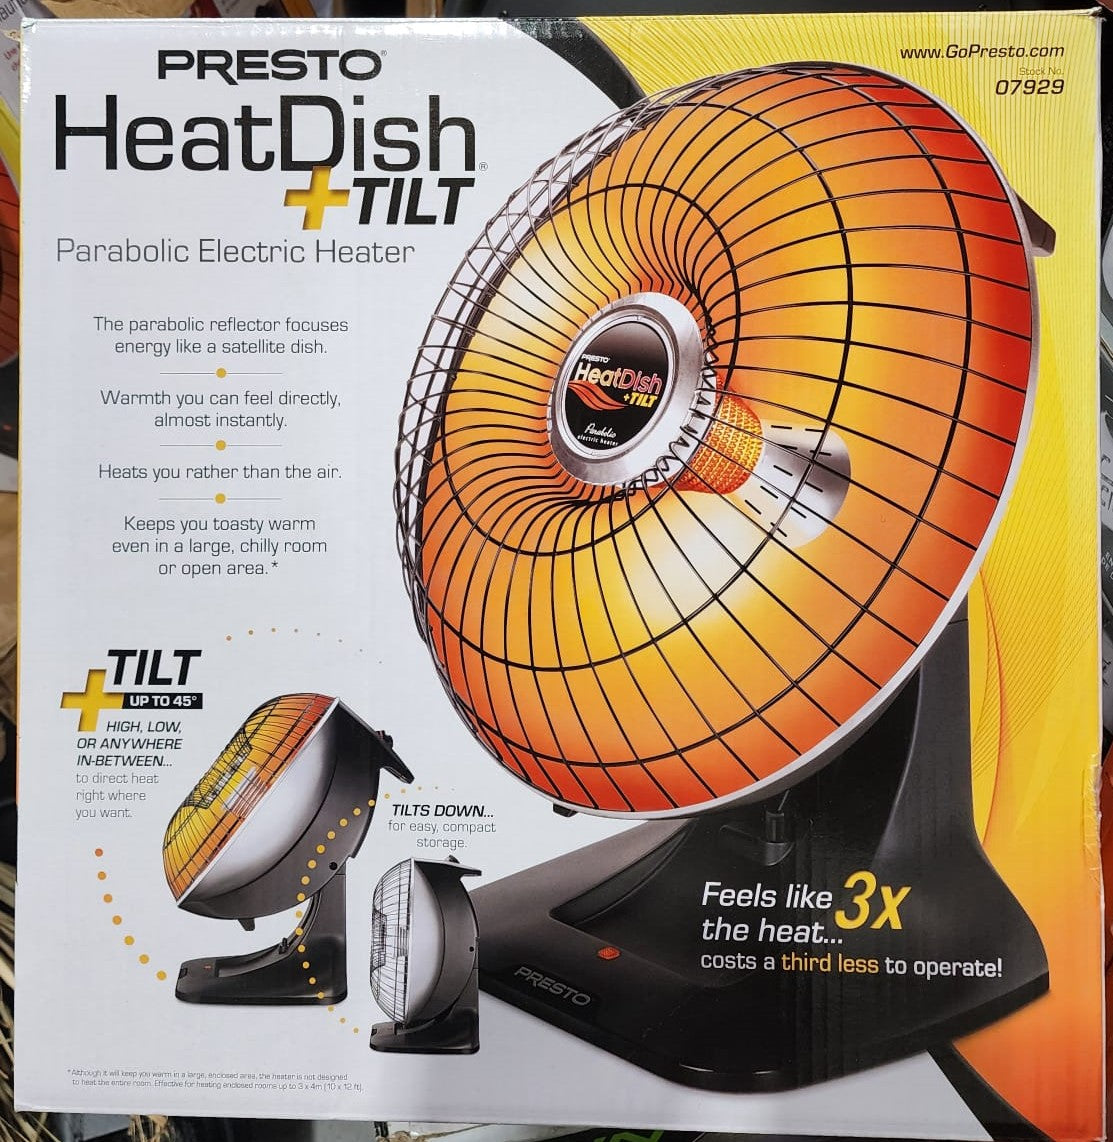 HeatDish+Tilt parabolic electric heater